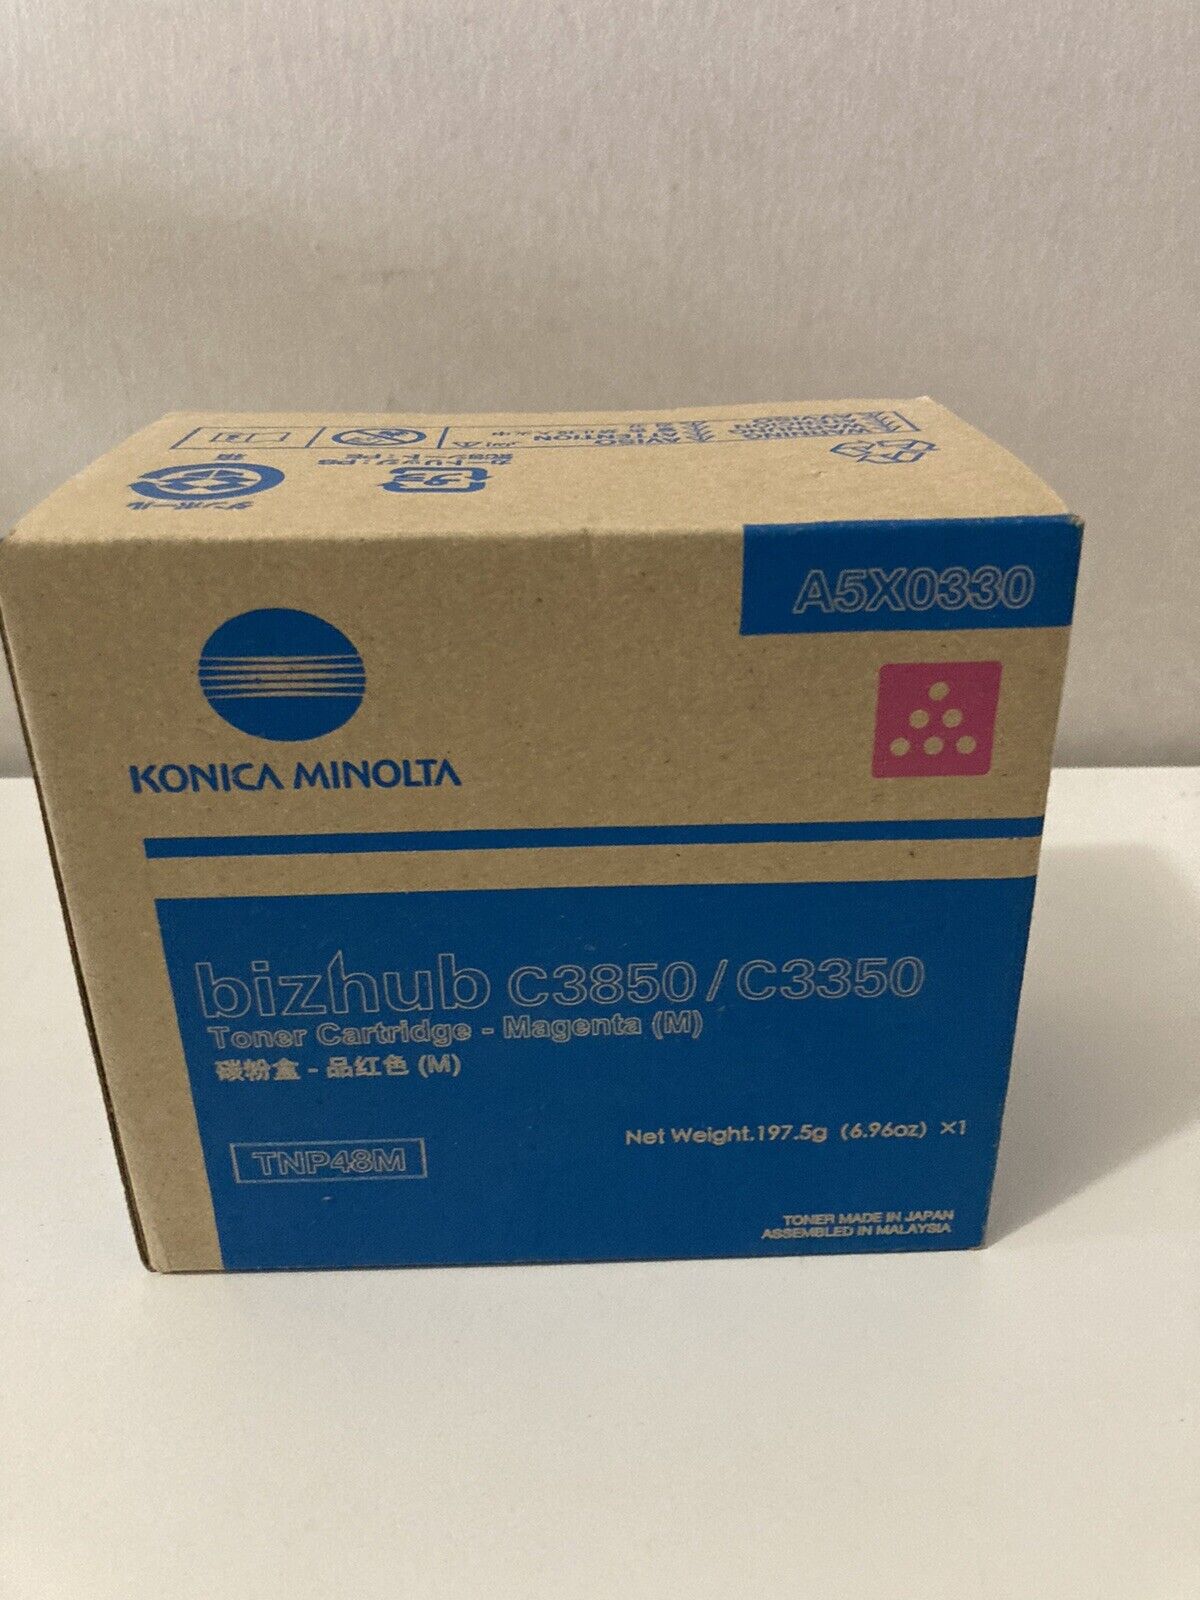 Genuine Konica Minolta TNP48M (A5X0330) Magenta Toner  - NEW SEALED